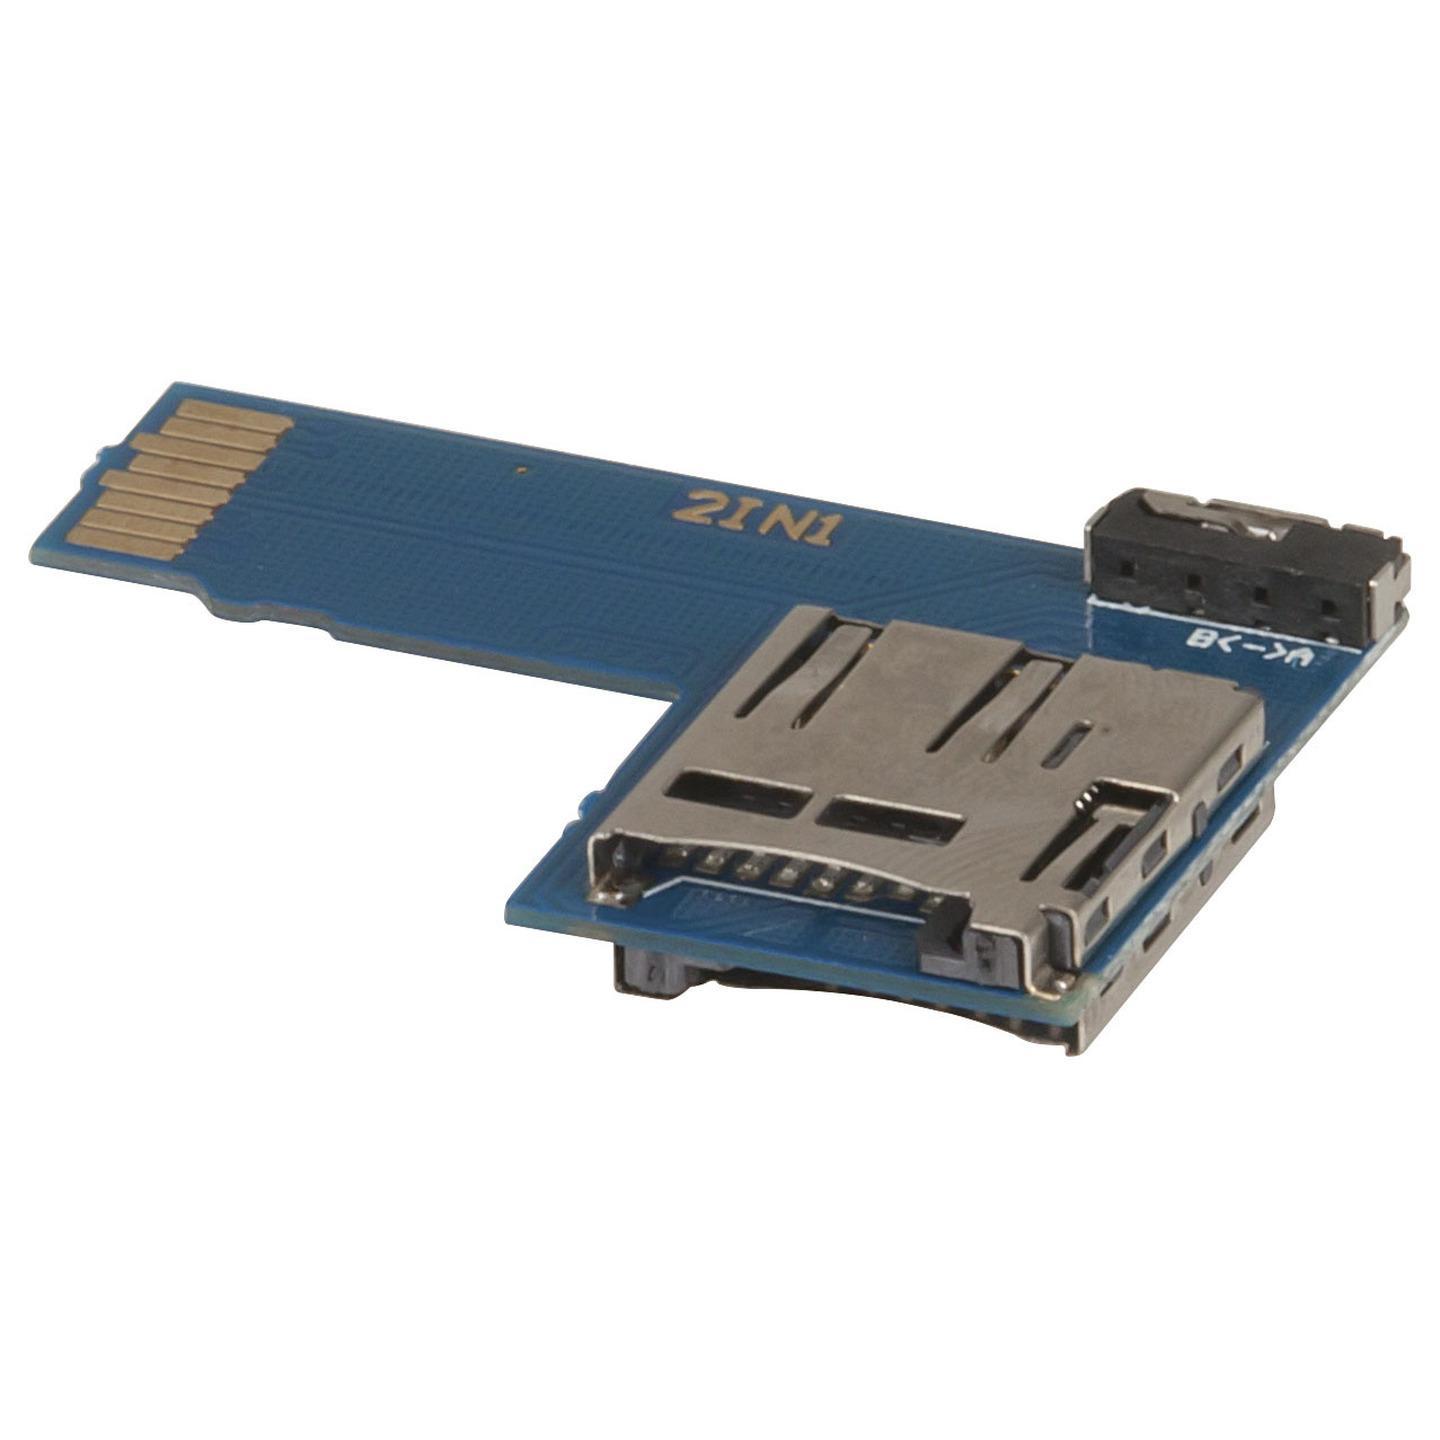 Dual Card Adaptor For Raspberry Pi